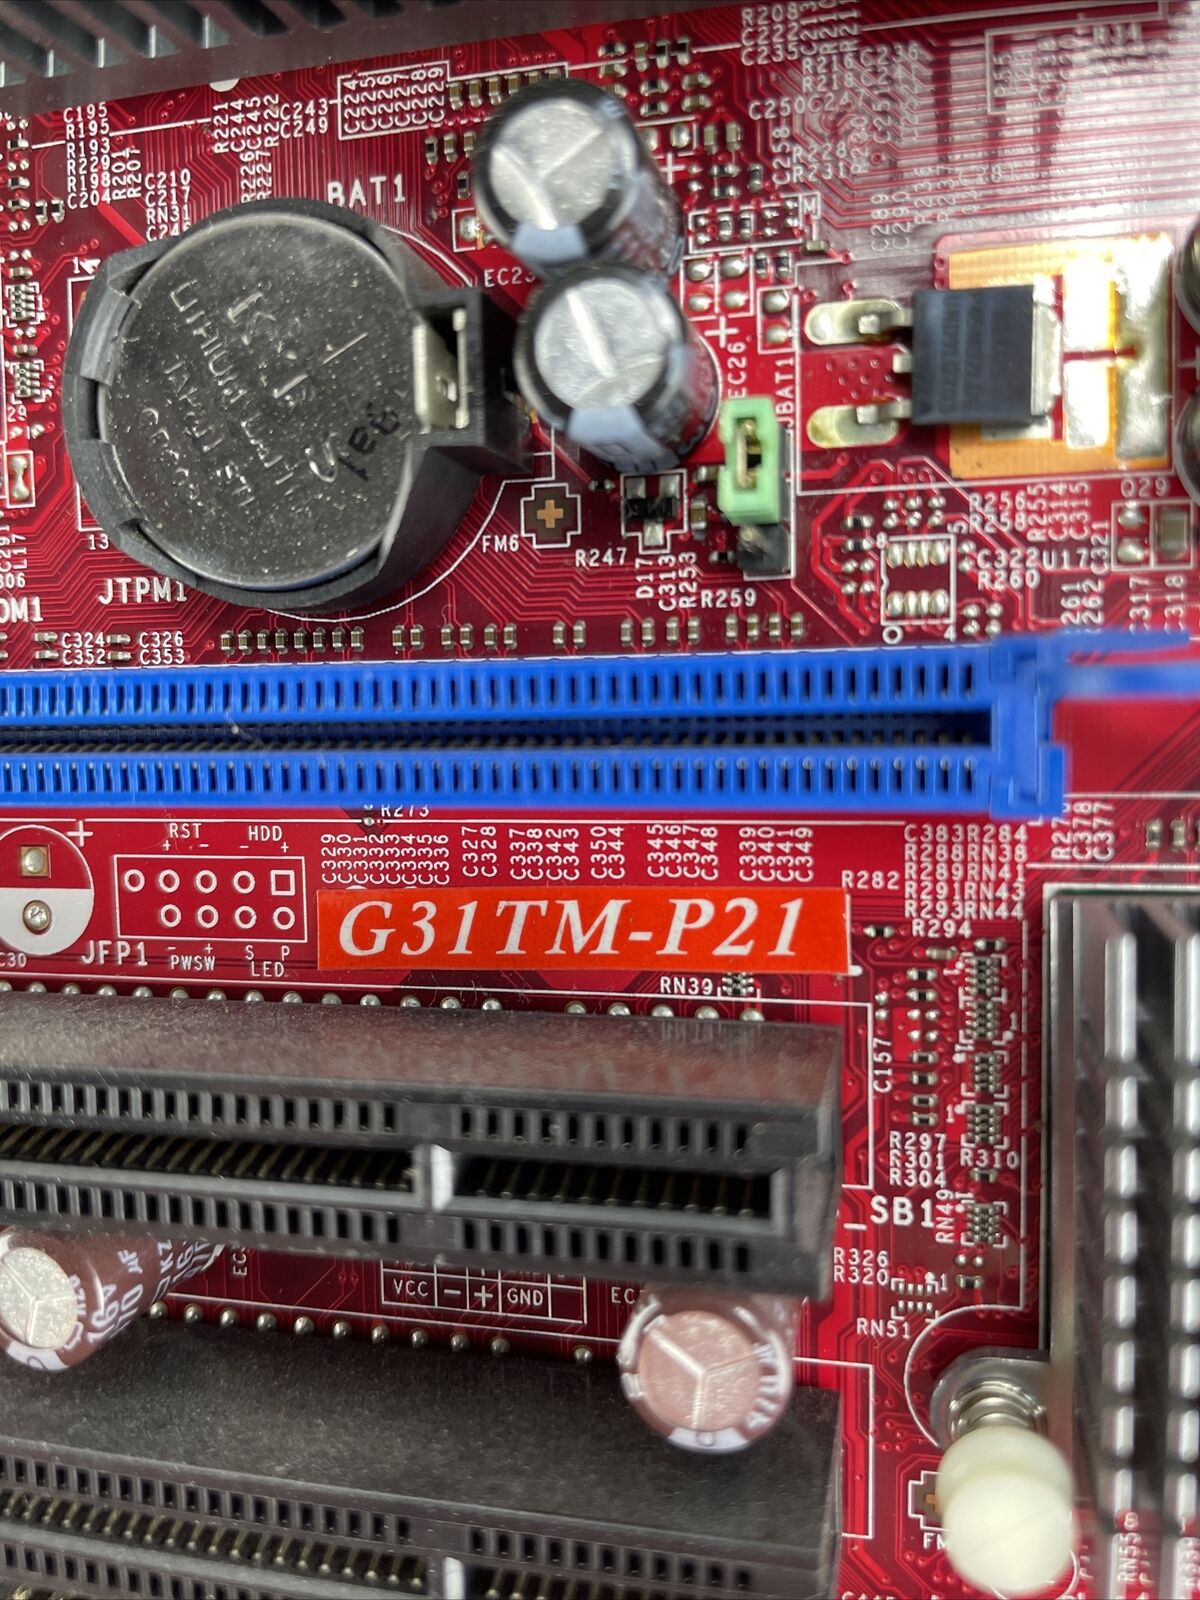 MSI MS-7529 Motherboard Intel Celeron E3200 2.4GHz 2GB RAM w/Shield